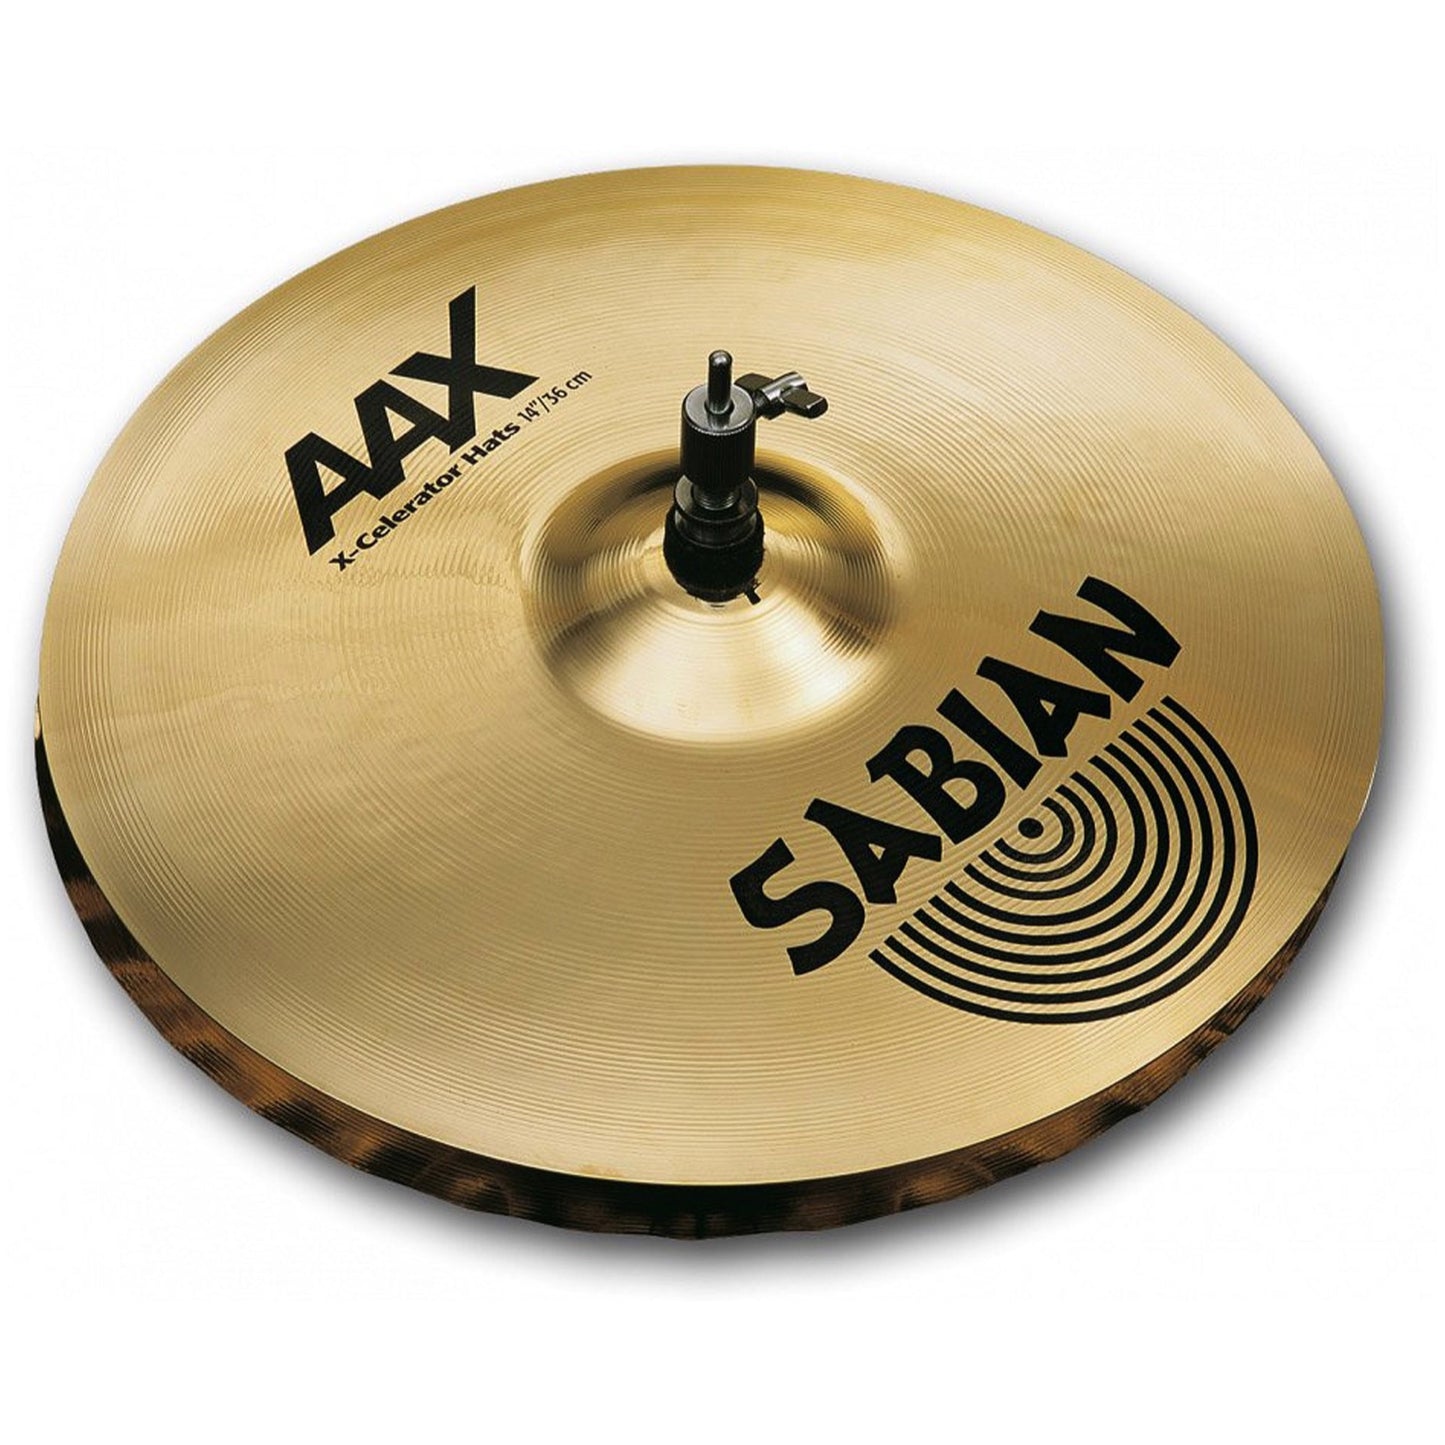 Sabian AAX Xcelerator Hi-Hat Cymbals (Pair), Brilliant Finish, 14 Inch